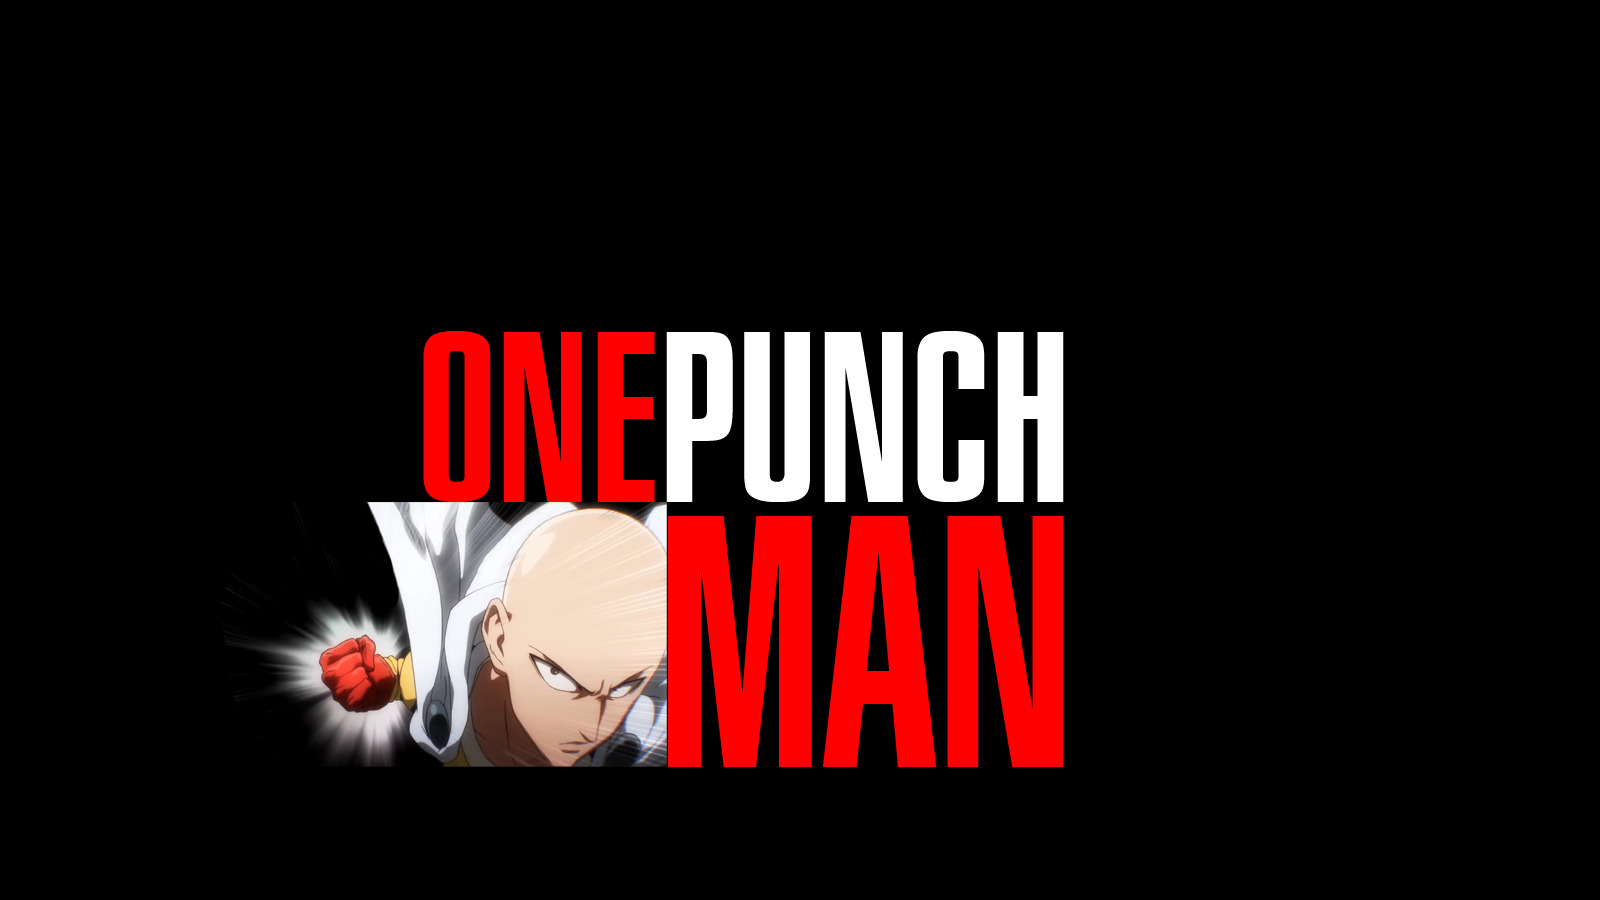 One Punch Man, Typography, Black Background, Anime, Saitama Wallpaper